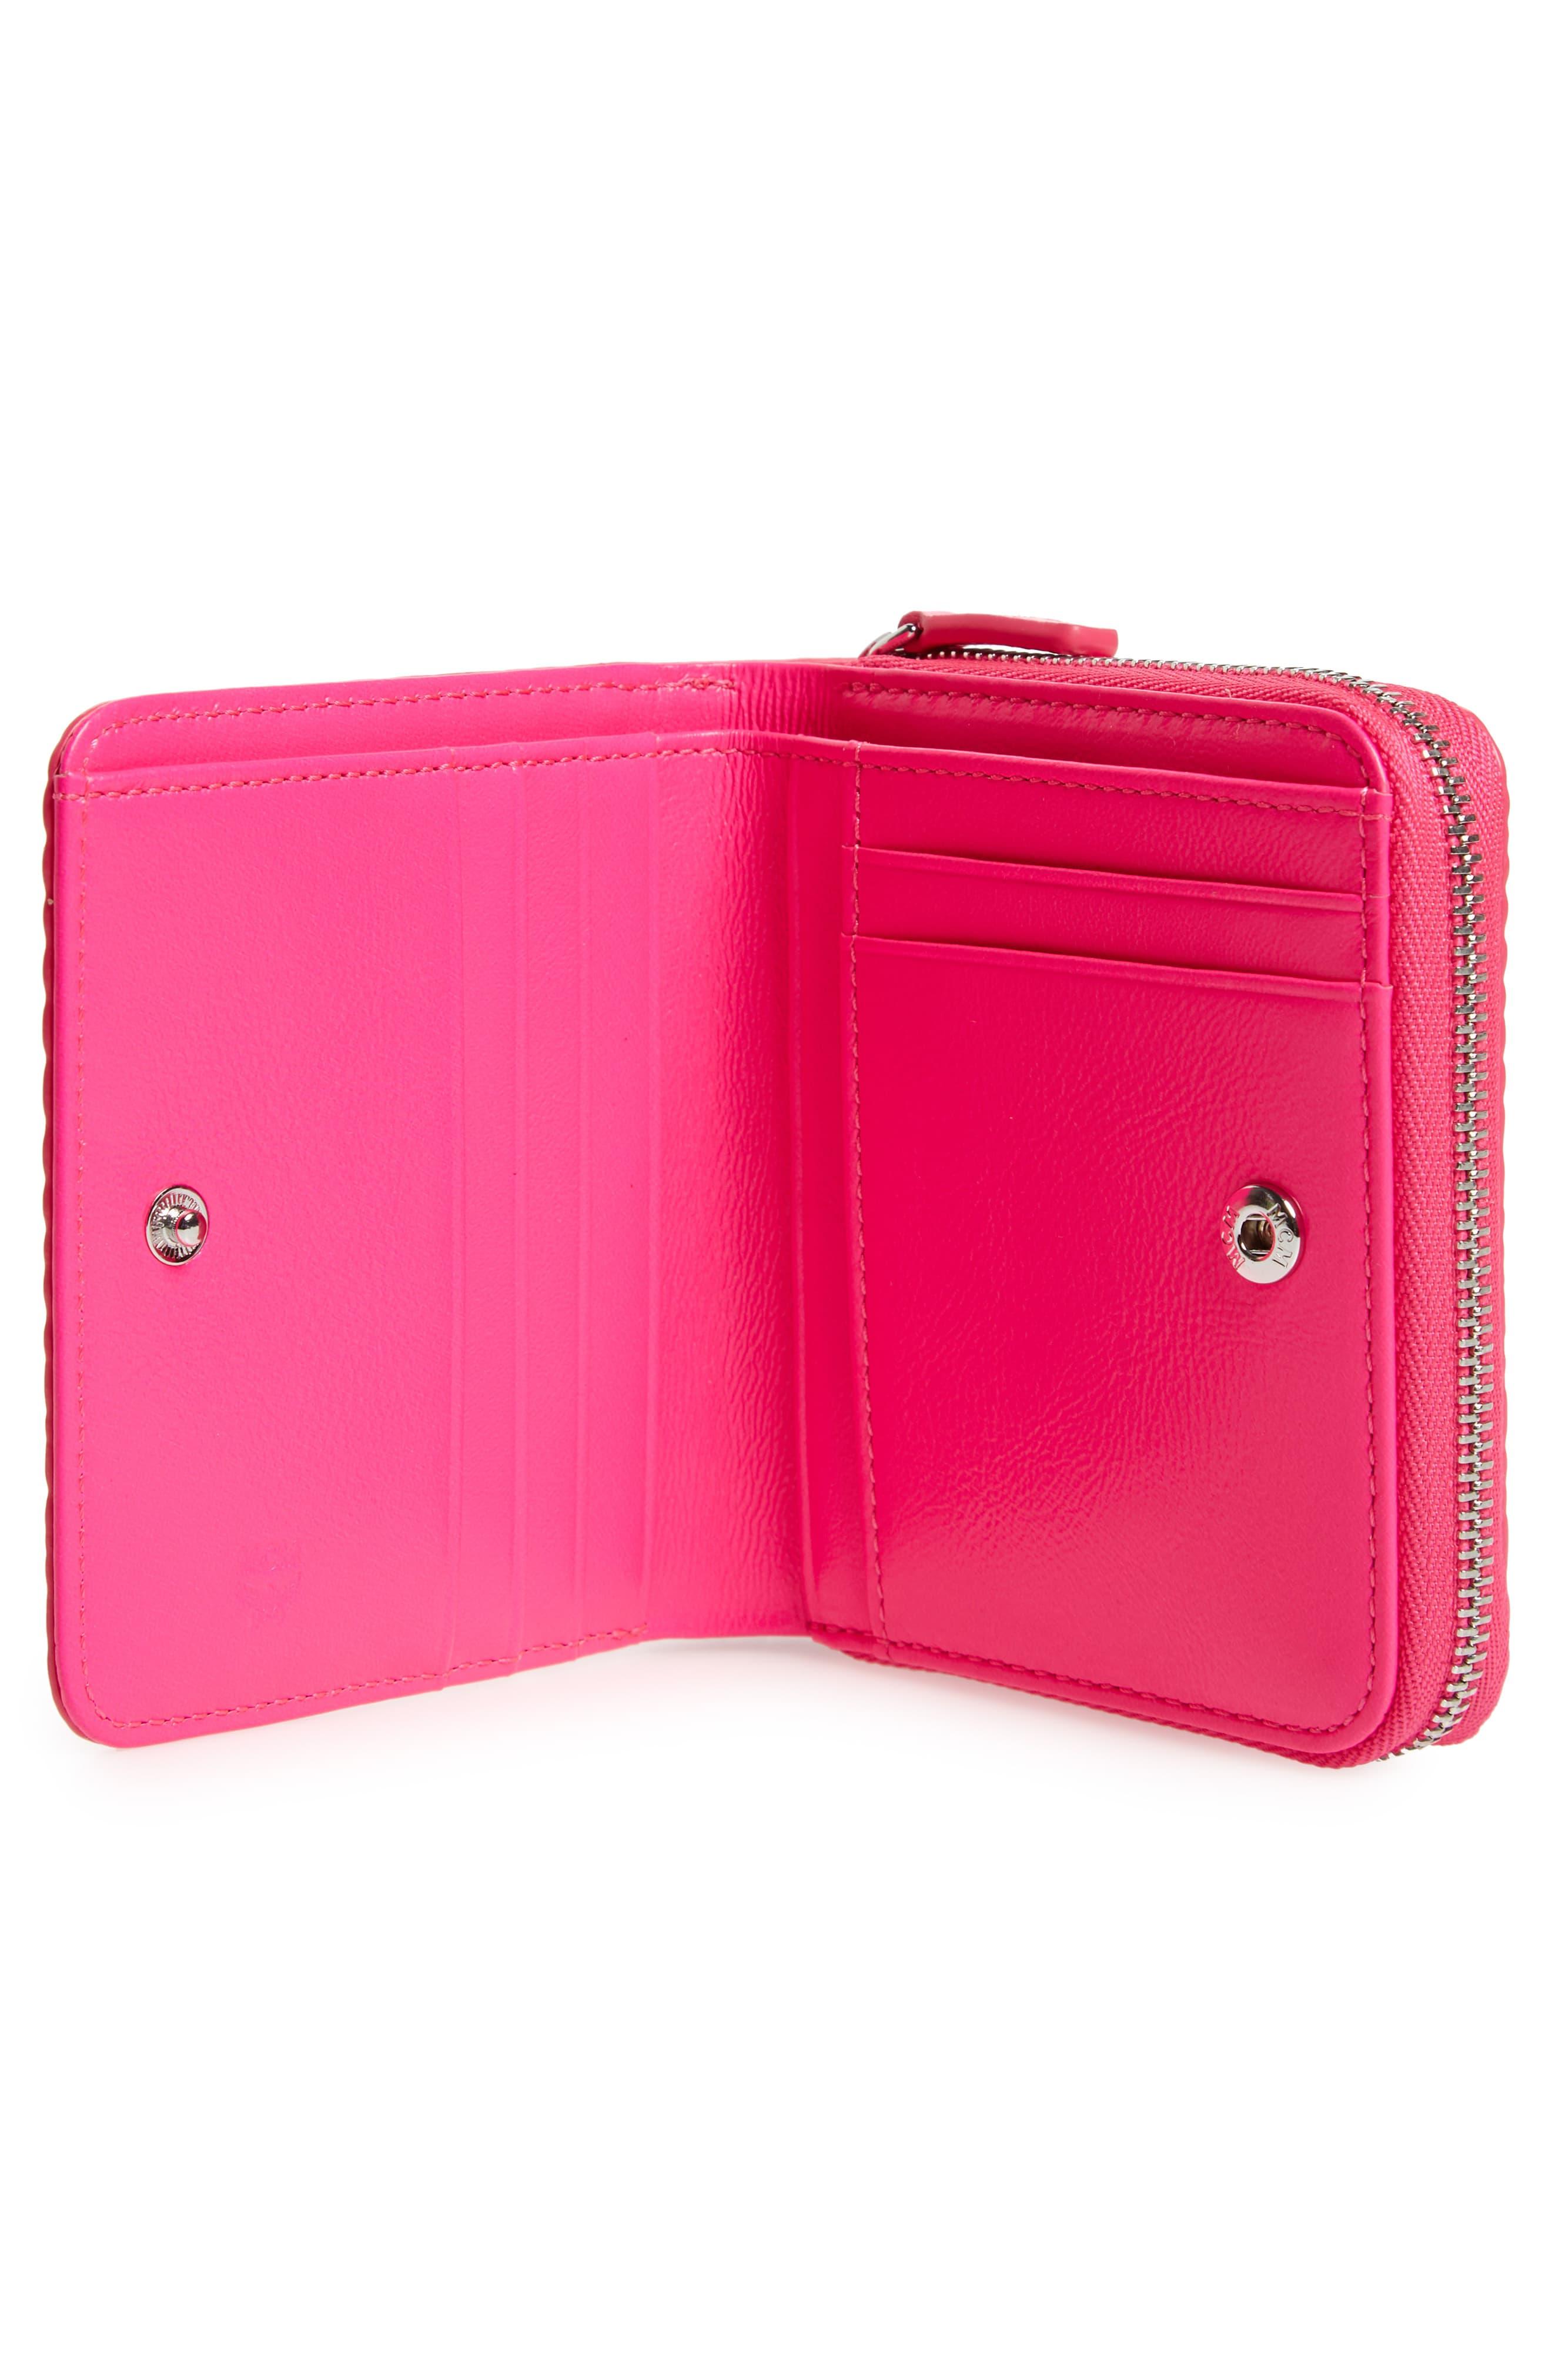 MCM Visetos Original Zip-around Wallet in Neon Pink (Pink) - Lyst